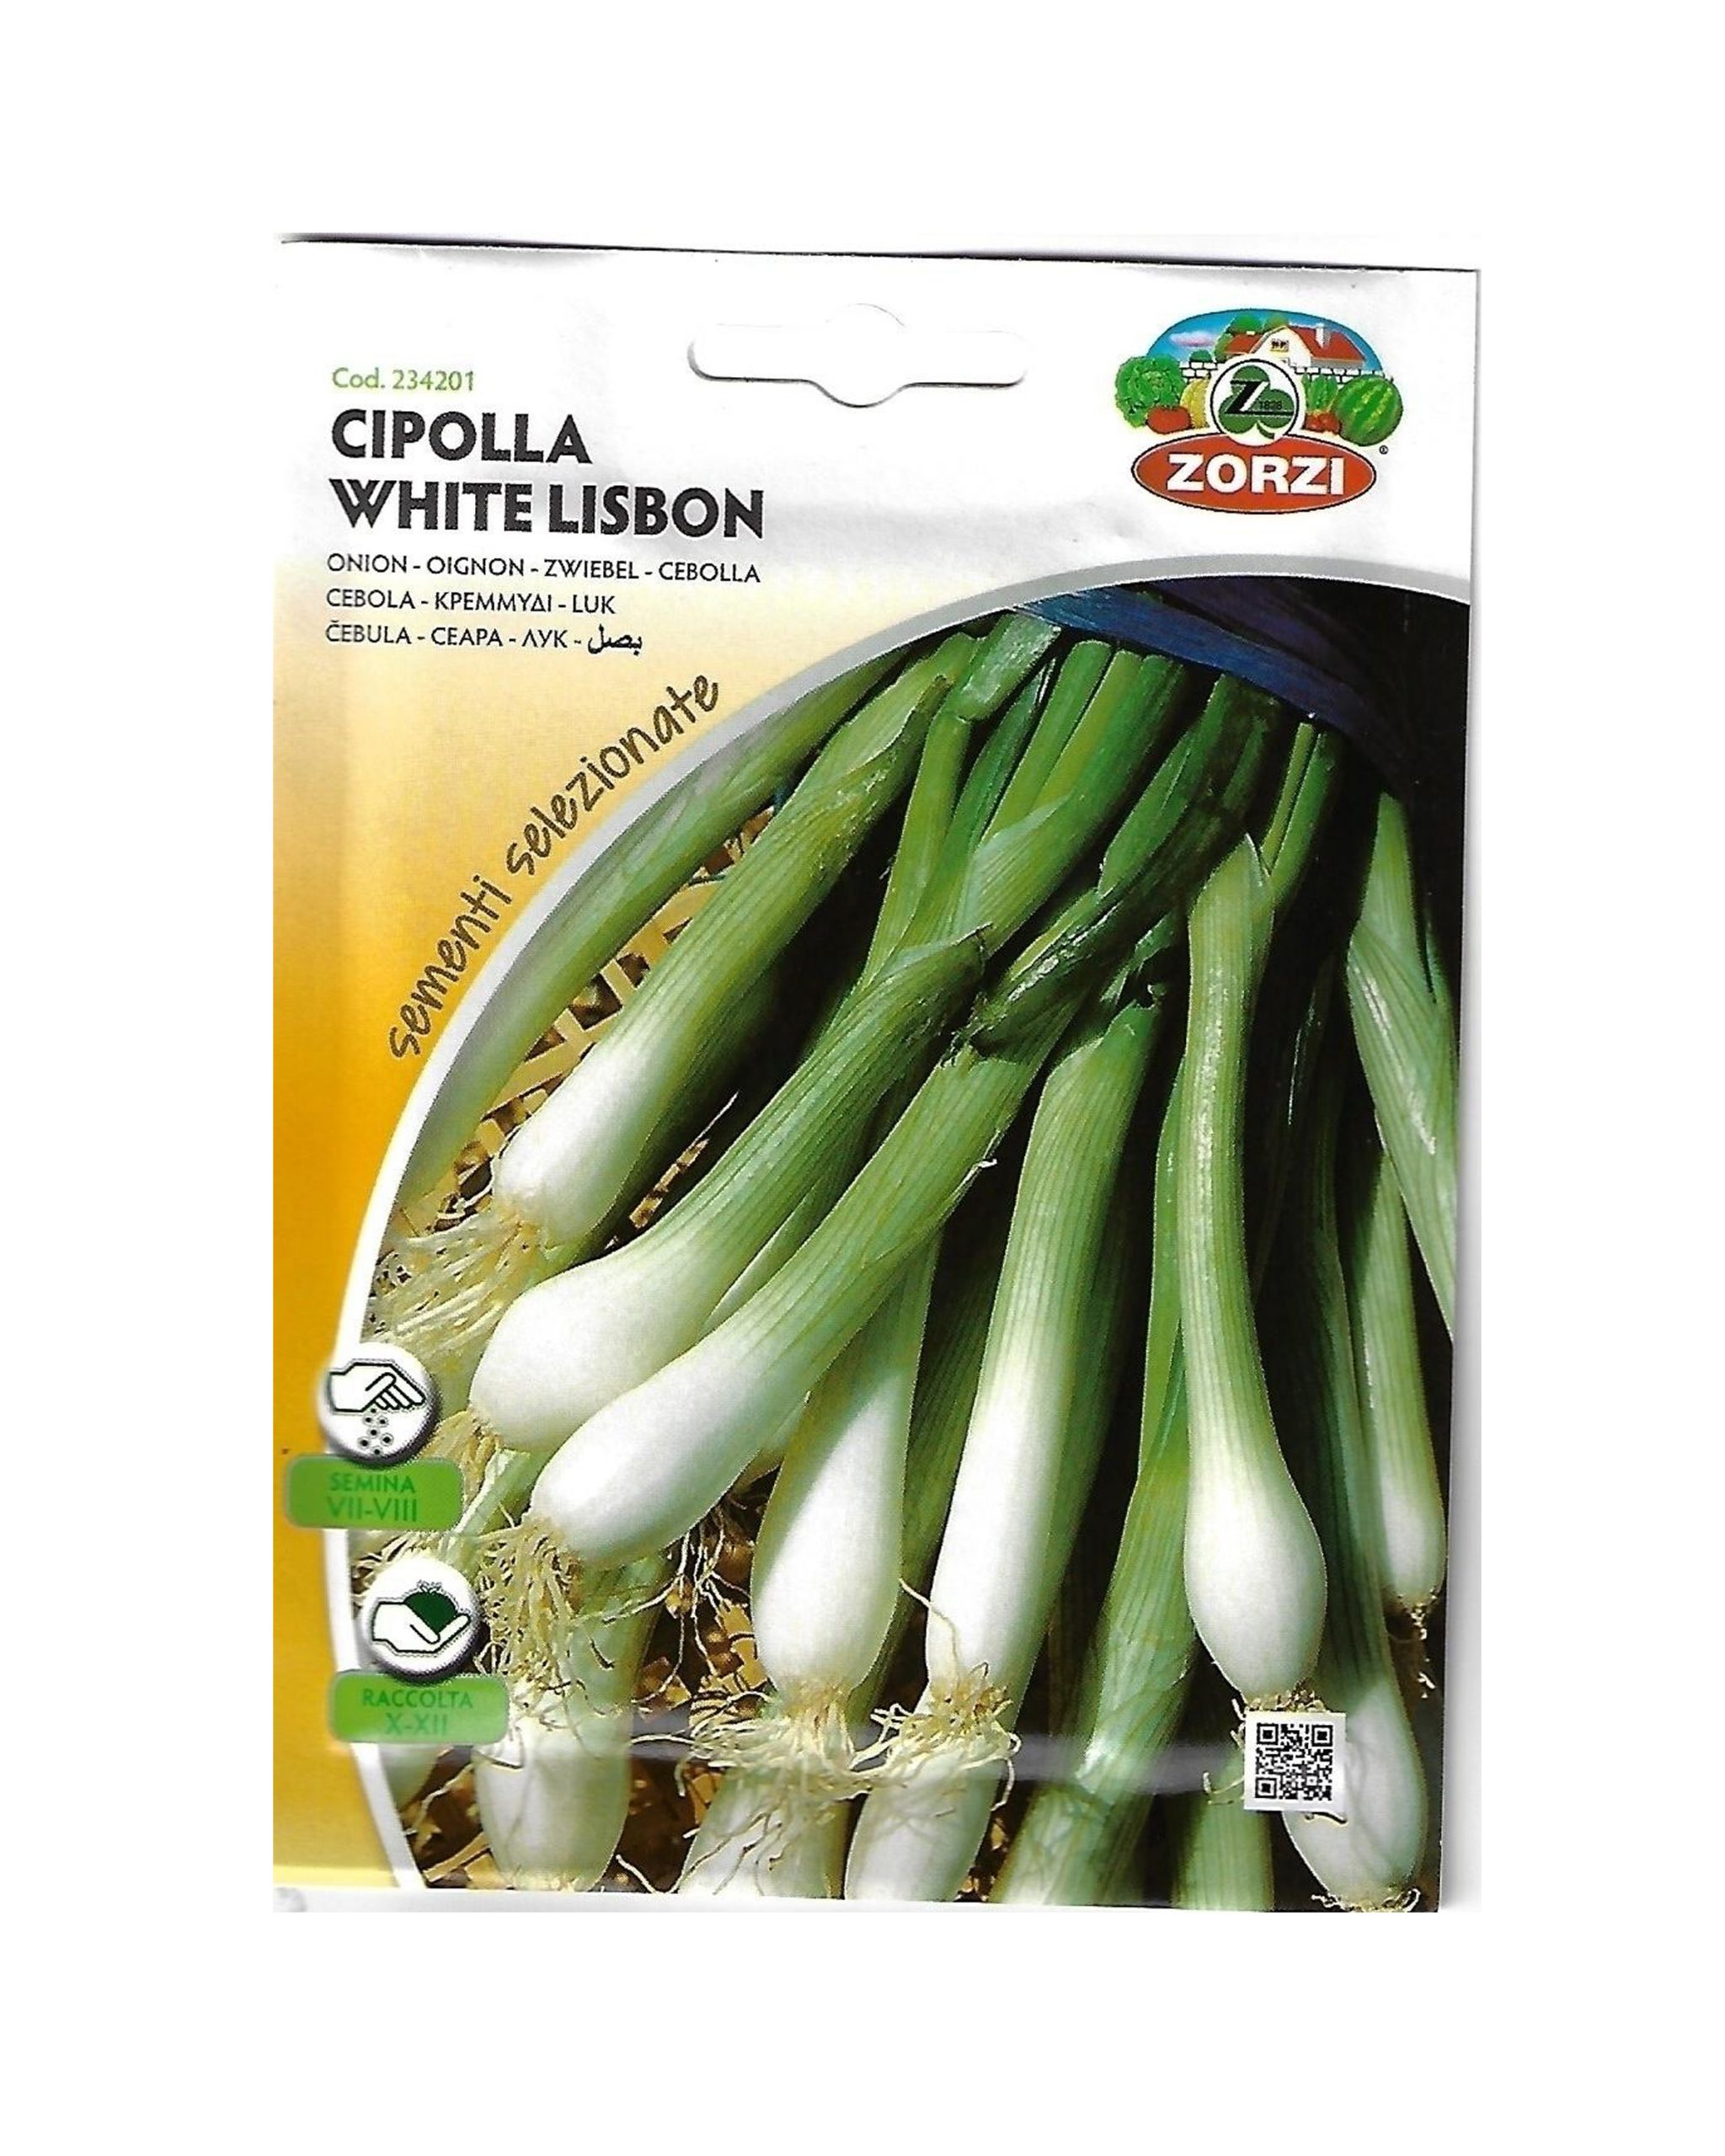 Buy Cipolla White Lisbon Online on Qetaat.com